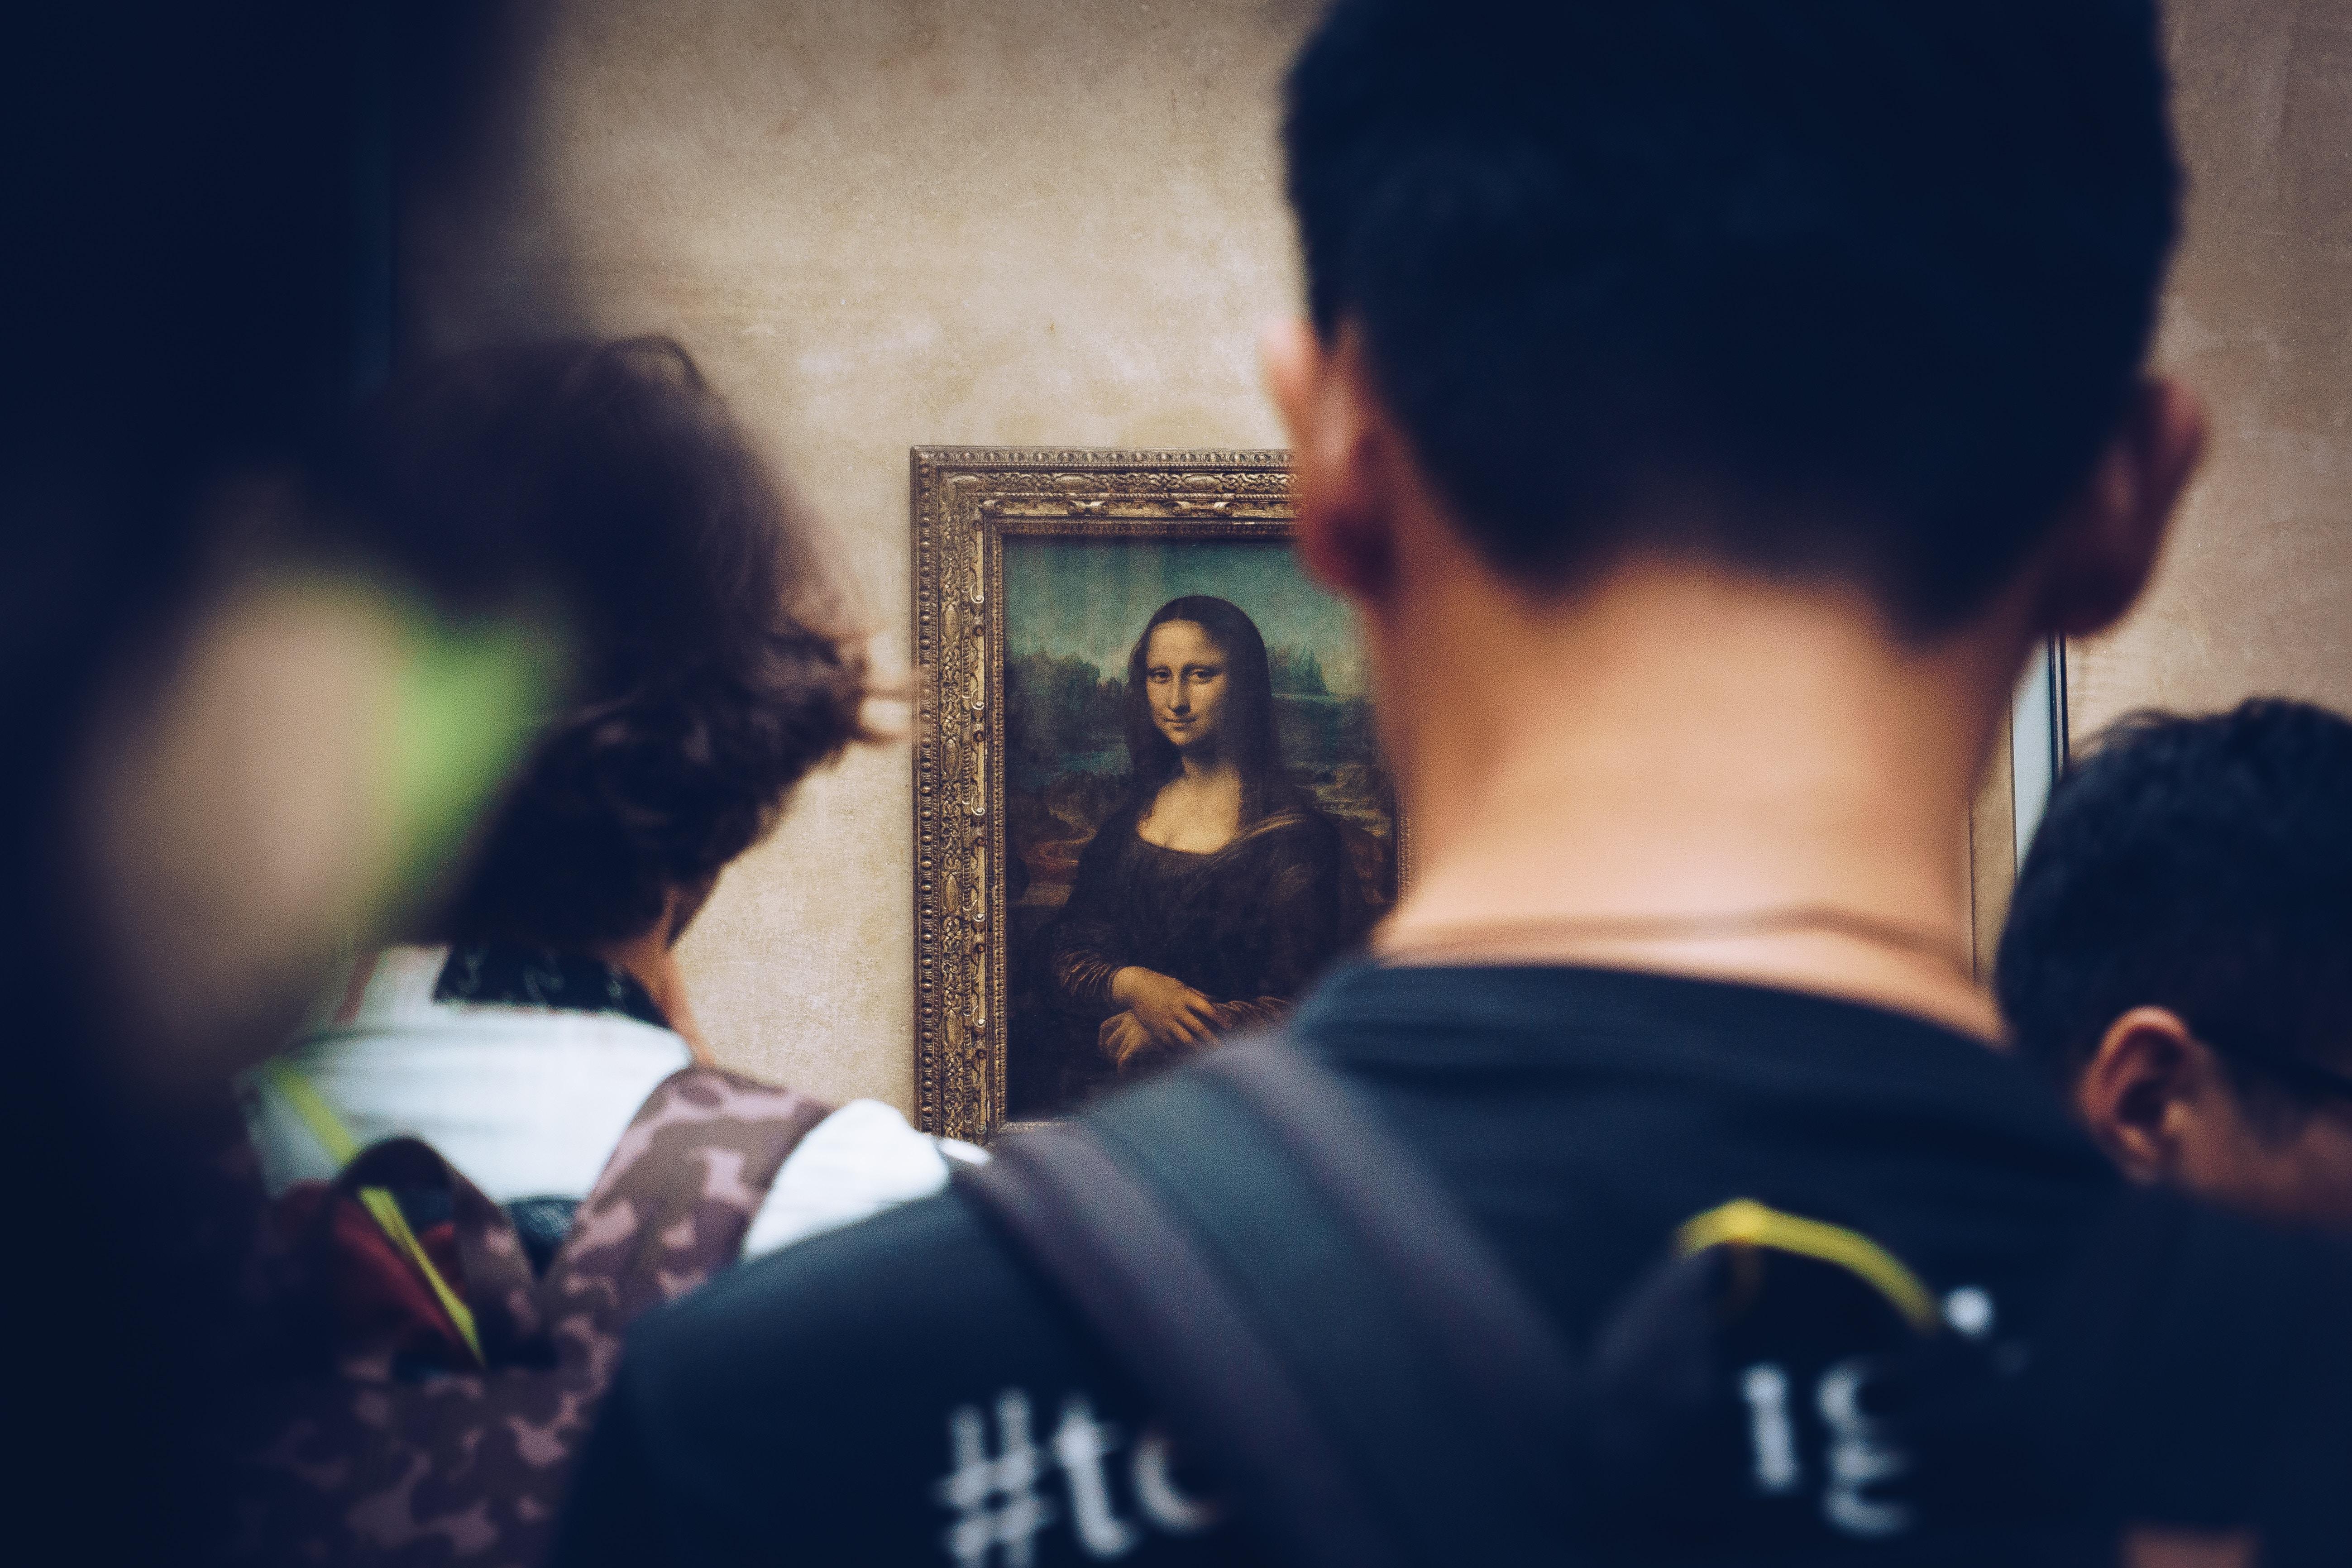 Visitantes del Louvre admirando la Gioconda. Foto: Juan Di Nella en Unsplash